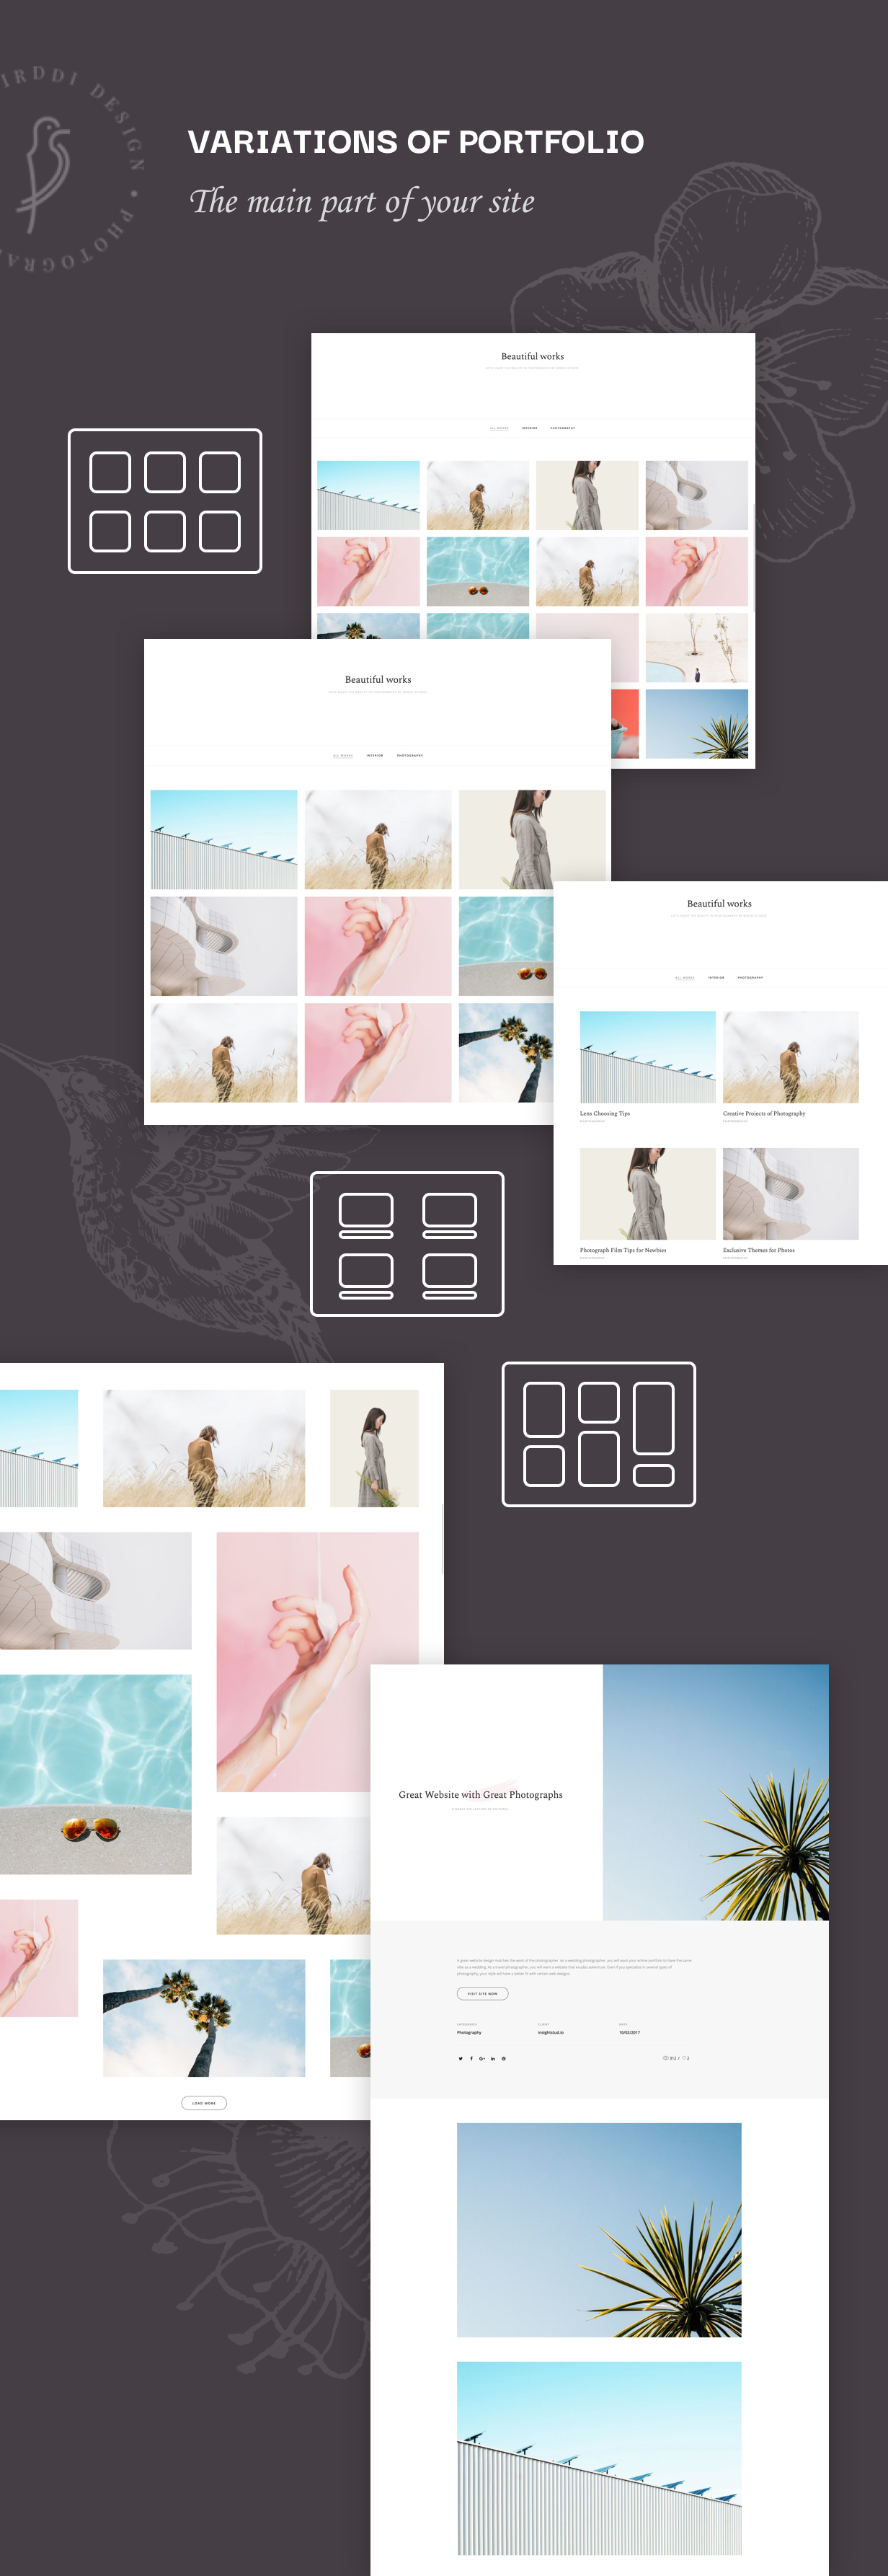 Birddi - A Creative Portfolio WordPress Theme - 4